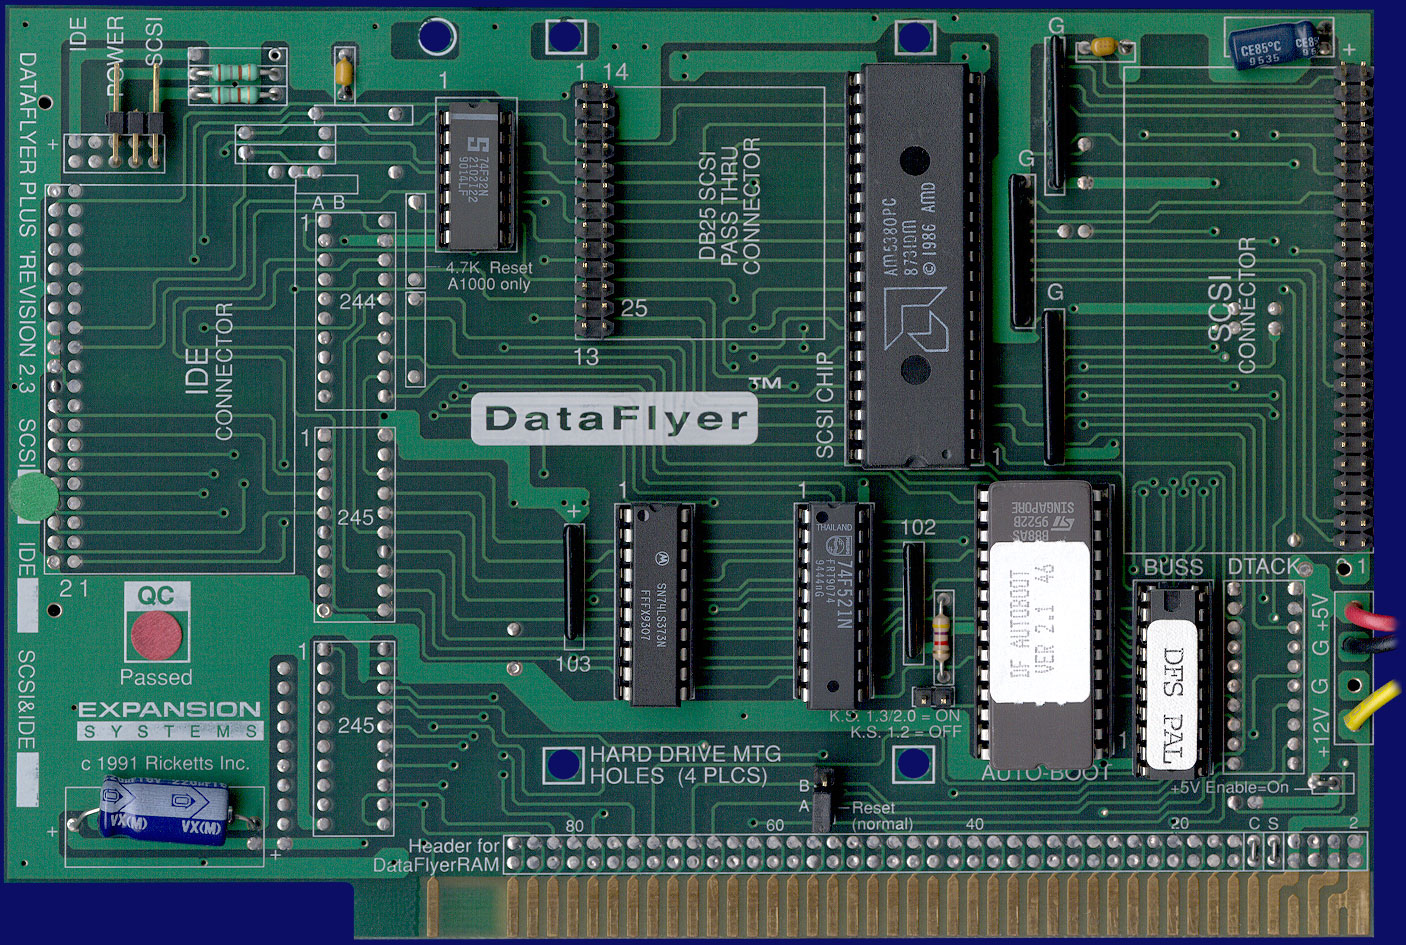 Expansion Systems DataFlyer Plus - SCSI version, front side